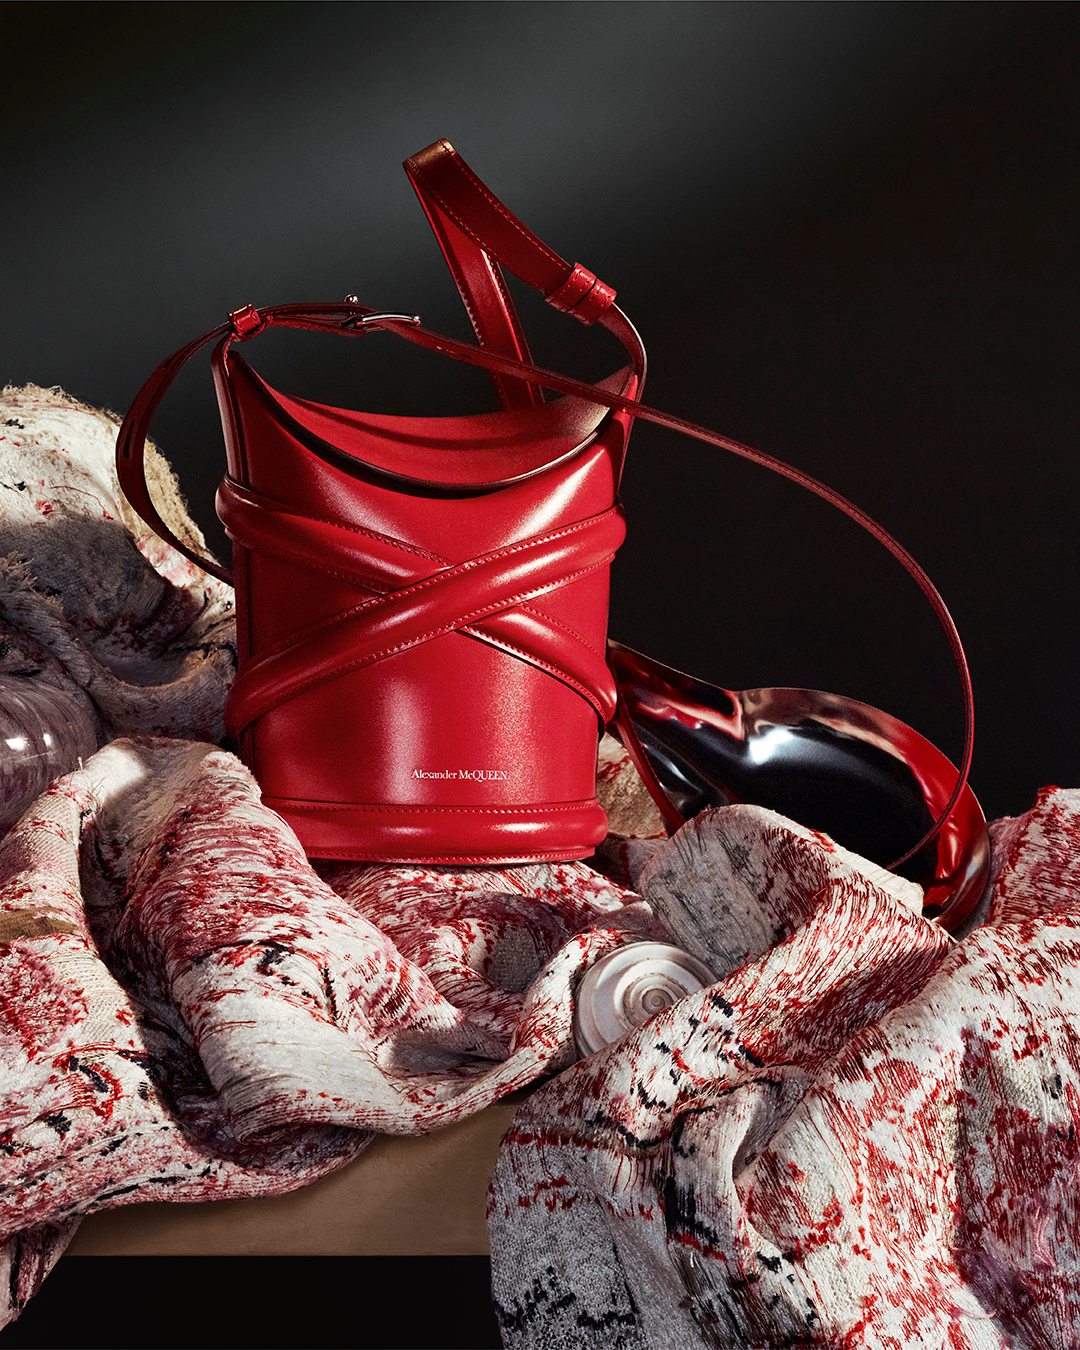 Alexander McQueen sort un sac inspiré de ses harnais